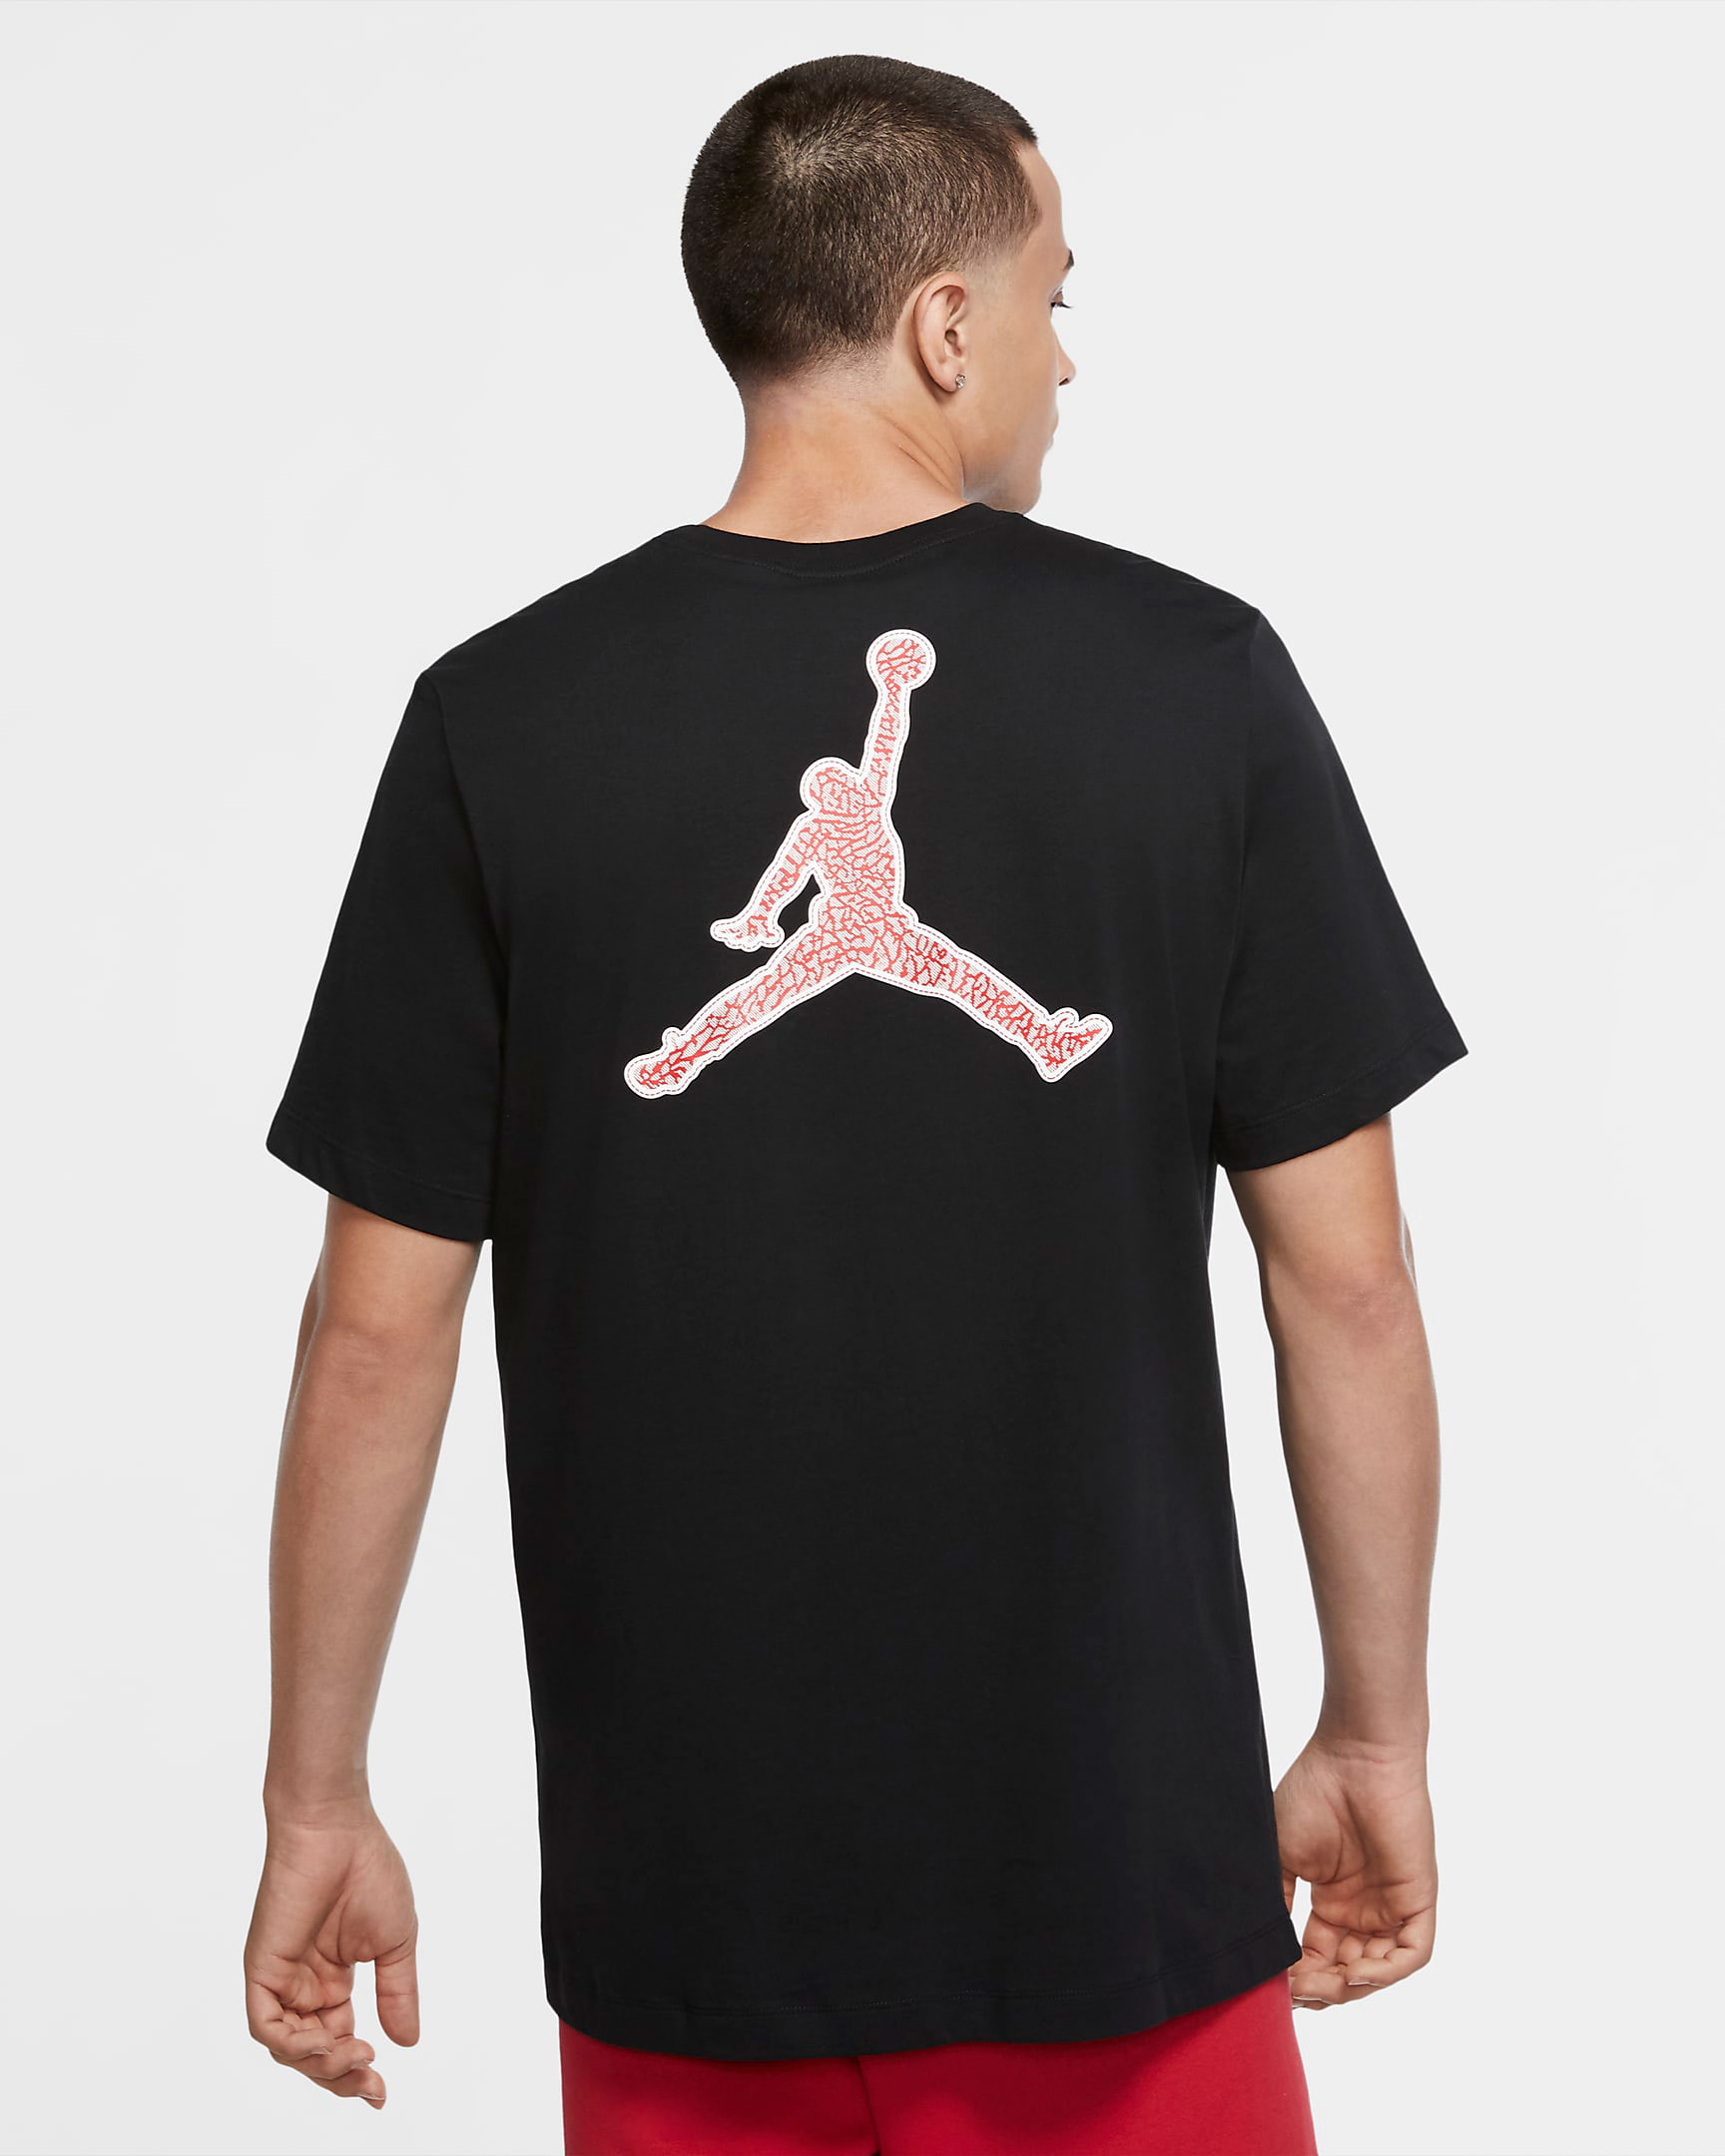 Air Jordan 3 Denim Fire Red Sneaker Shirts | SneakerFits.com